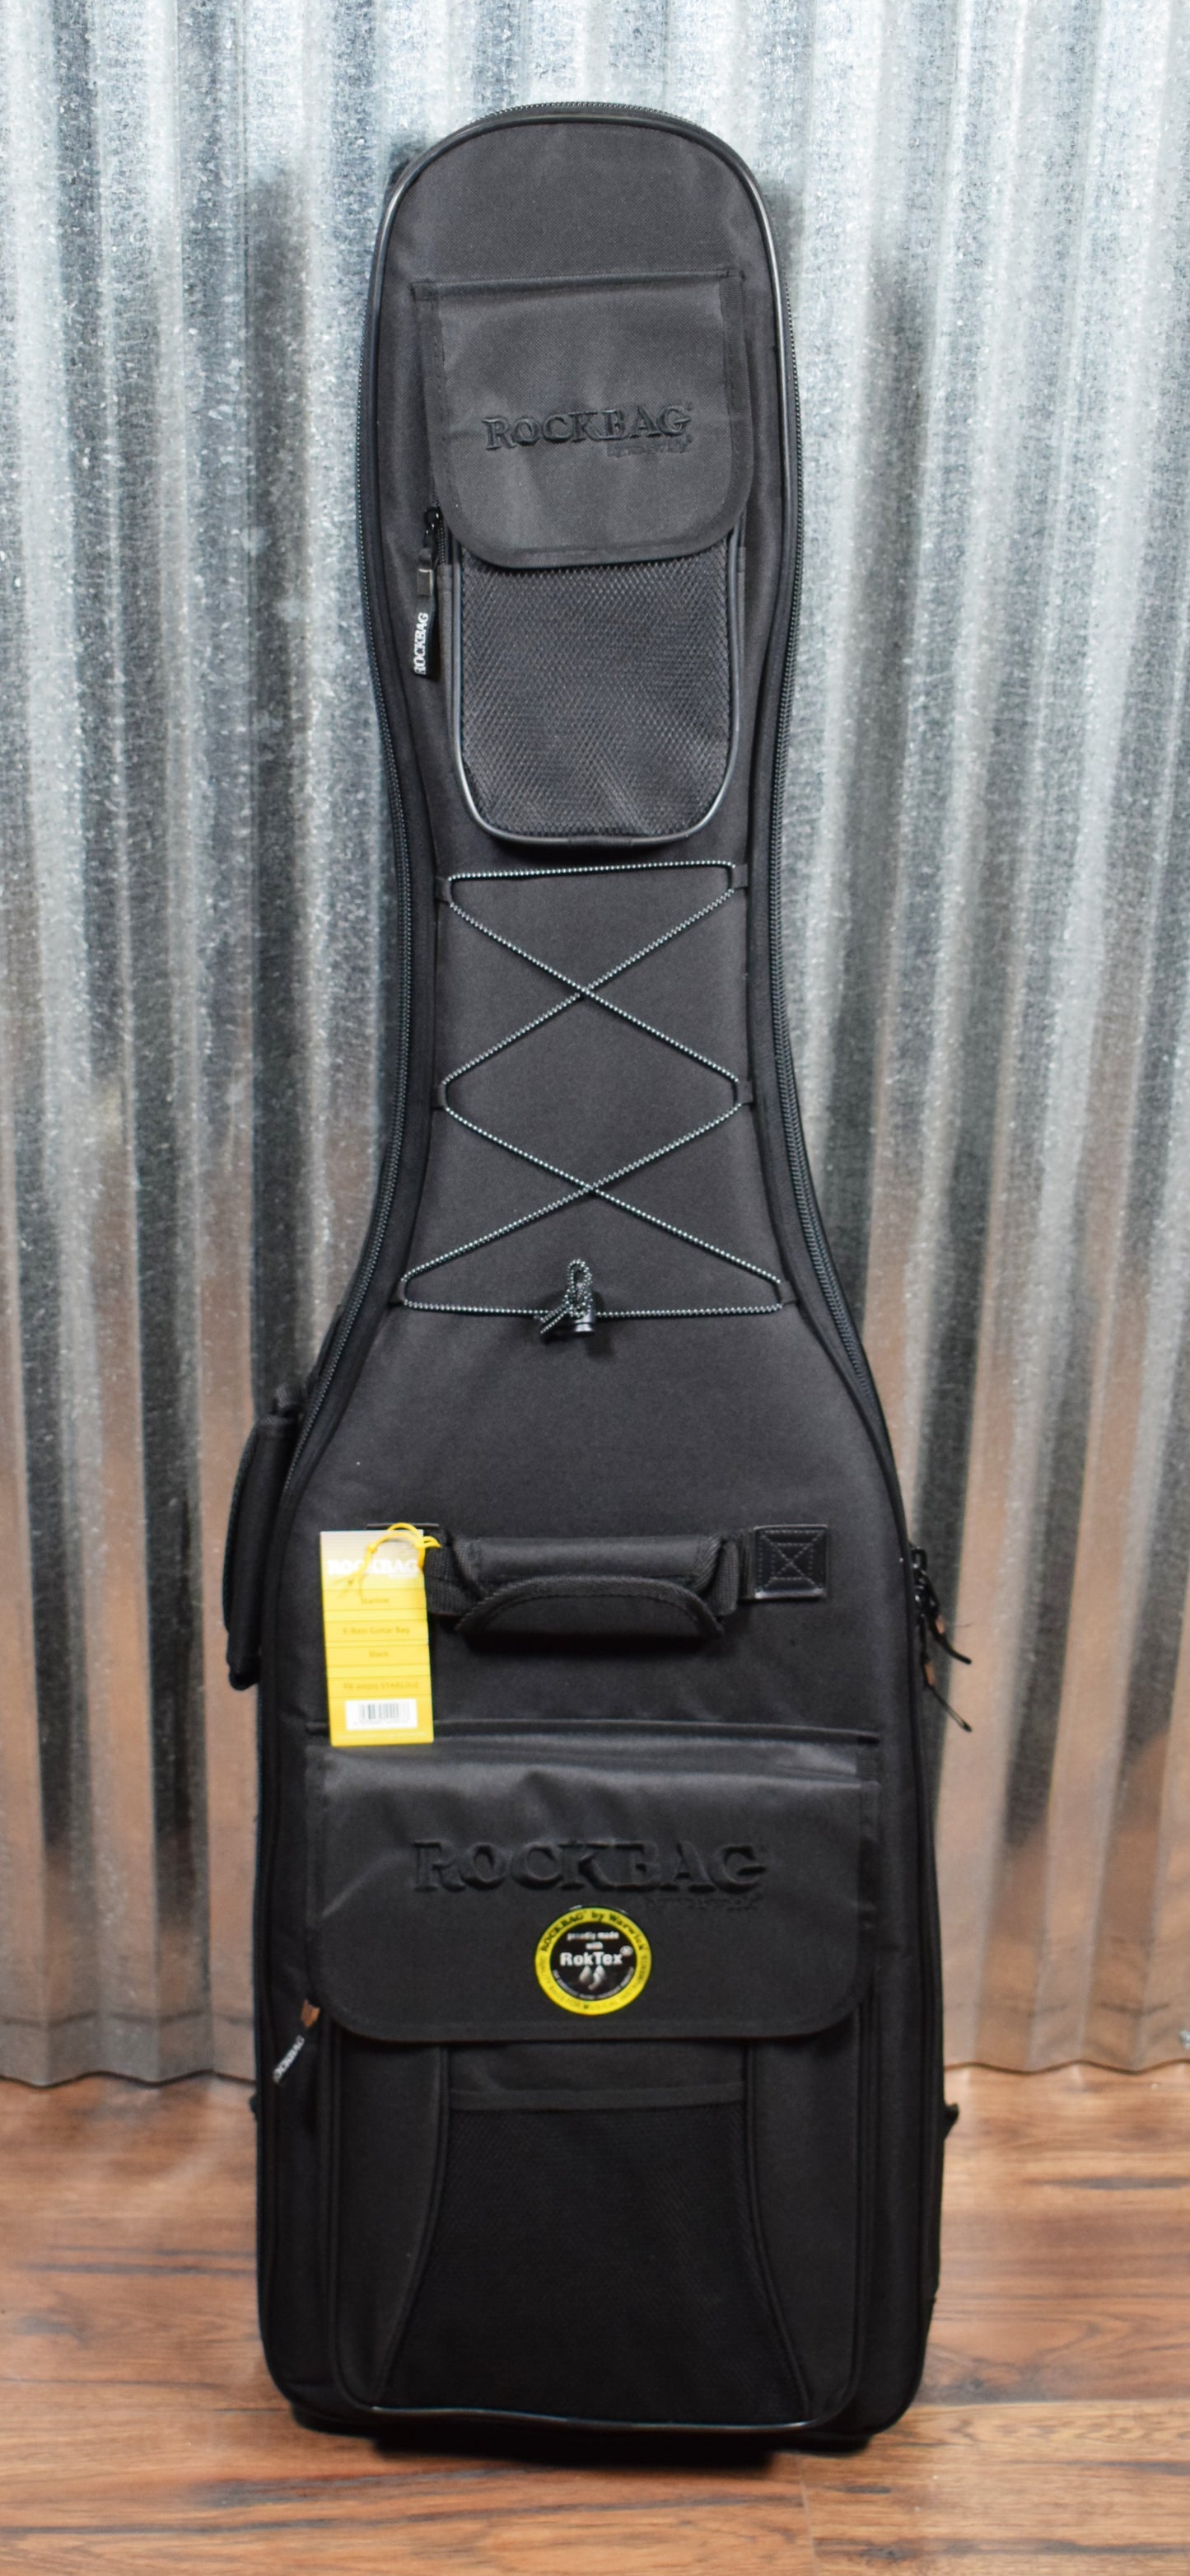 Warwick German Pro Series Streamer LX 4 Burgundy 4 String Bass & Bag #6417